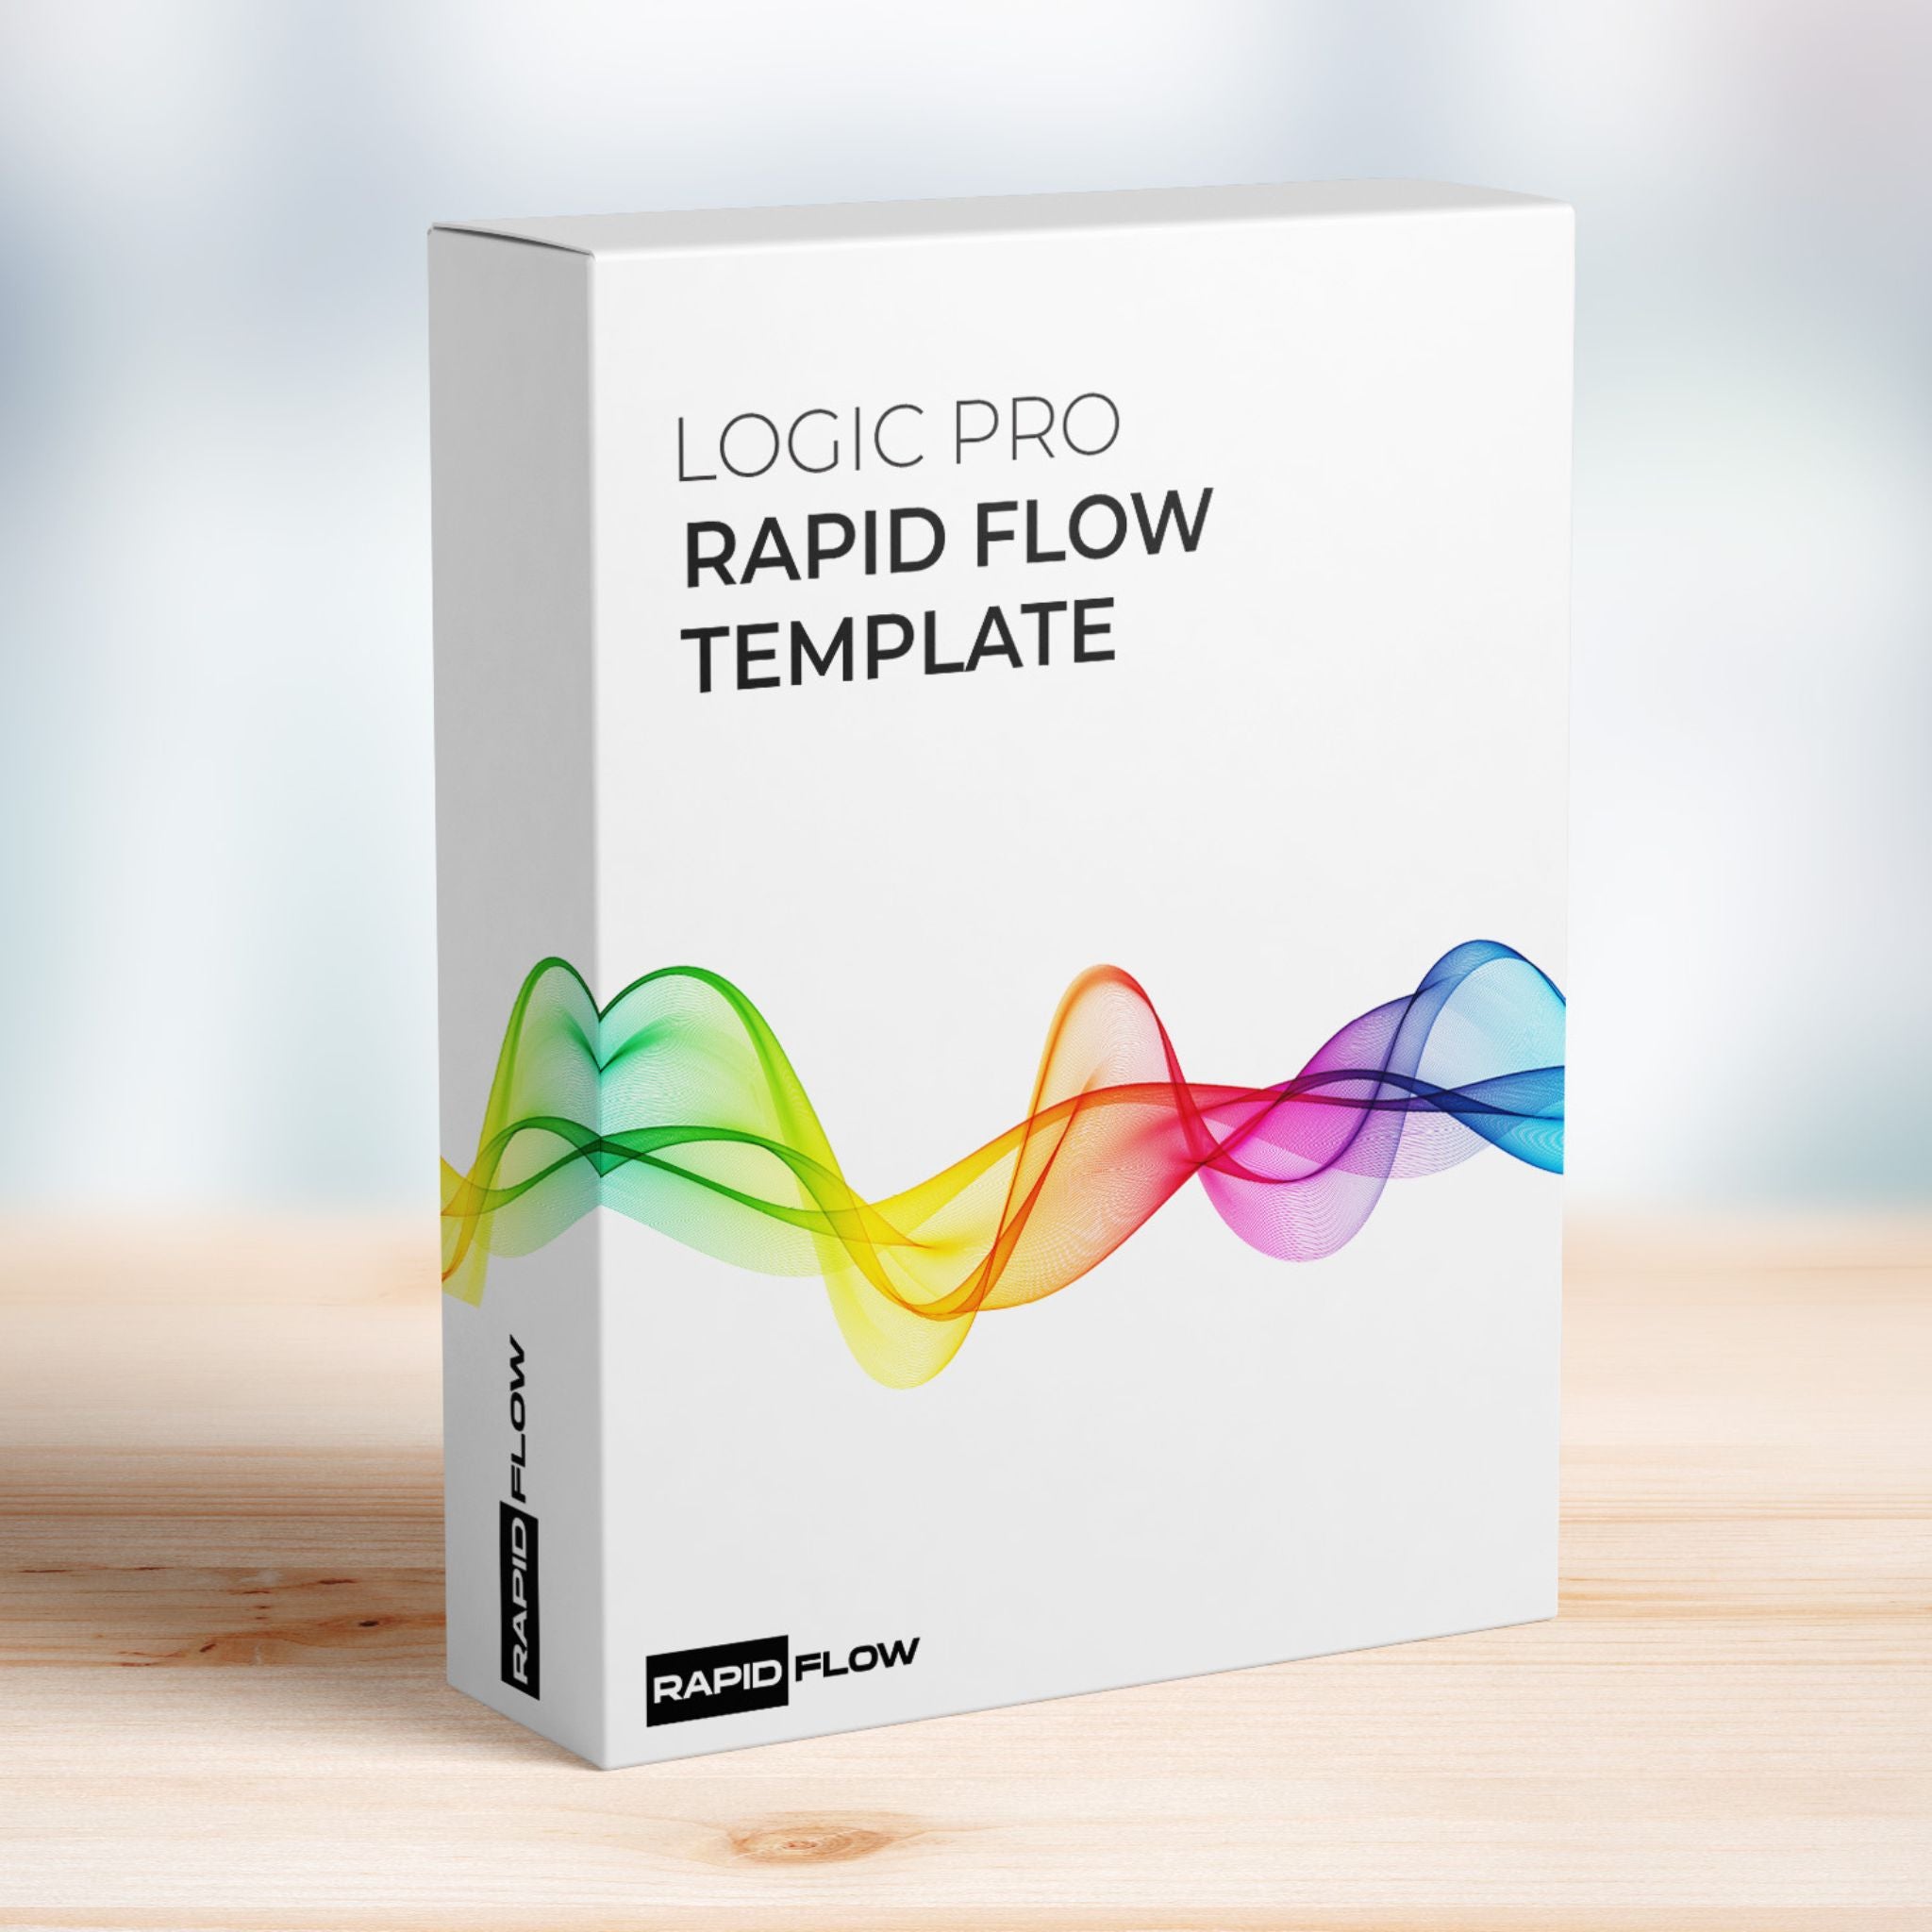 Logic Pro Template by Rapid Flow